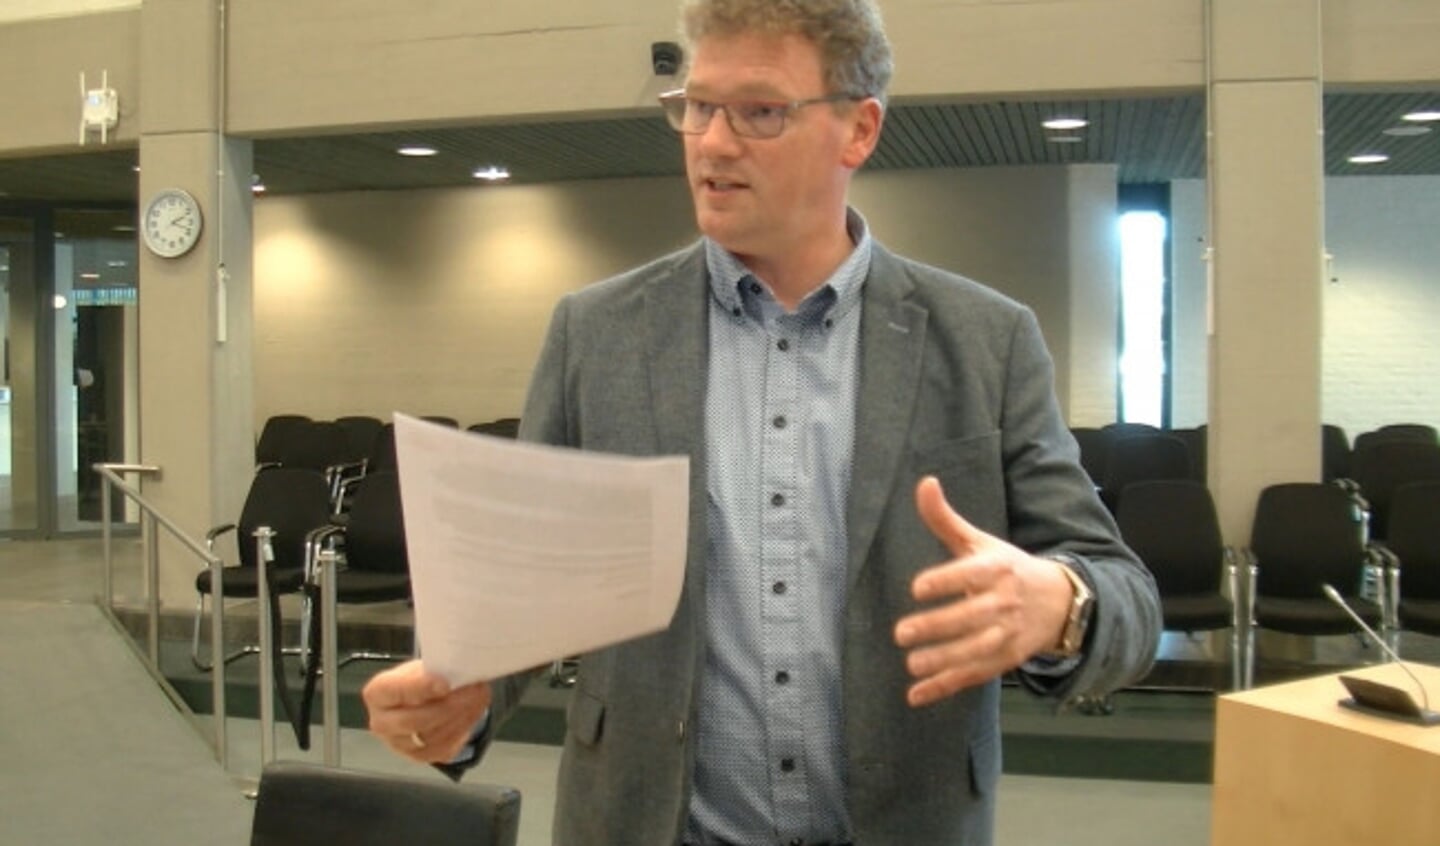  Centrummanager Leo Hoksbergen